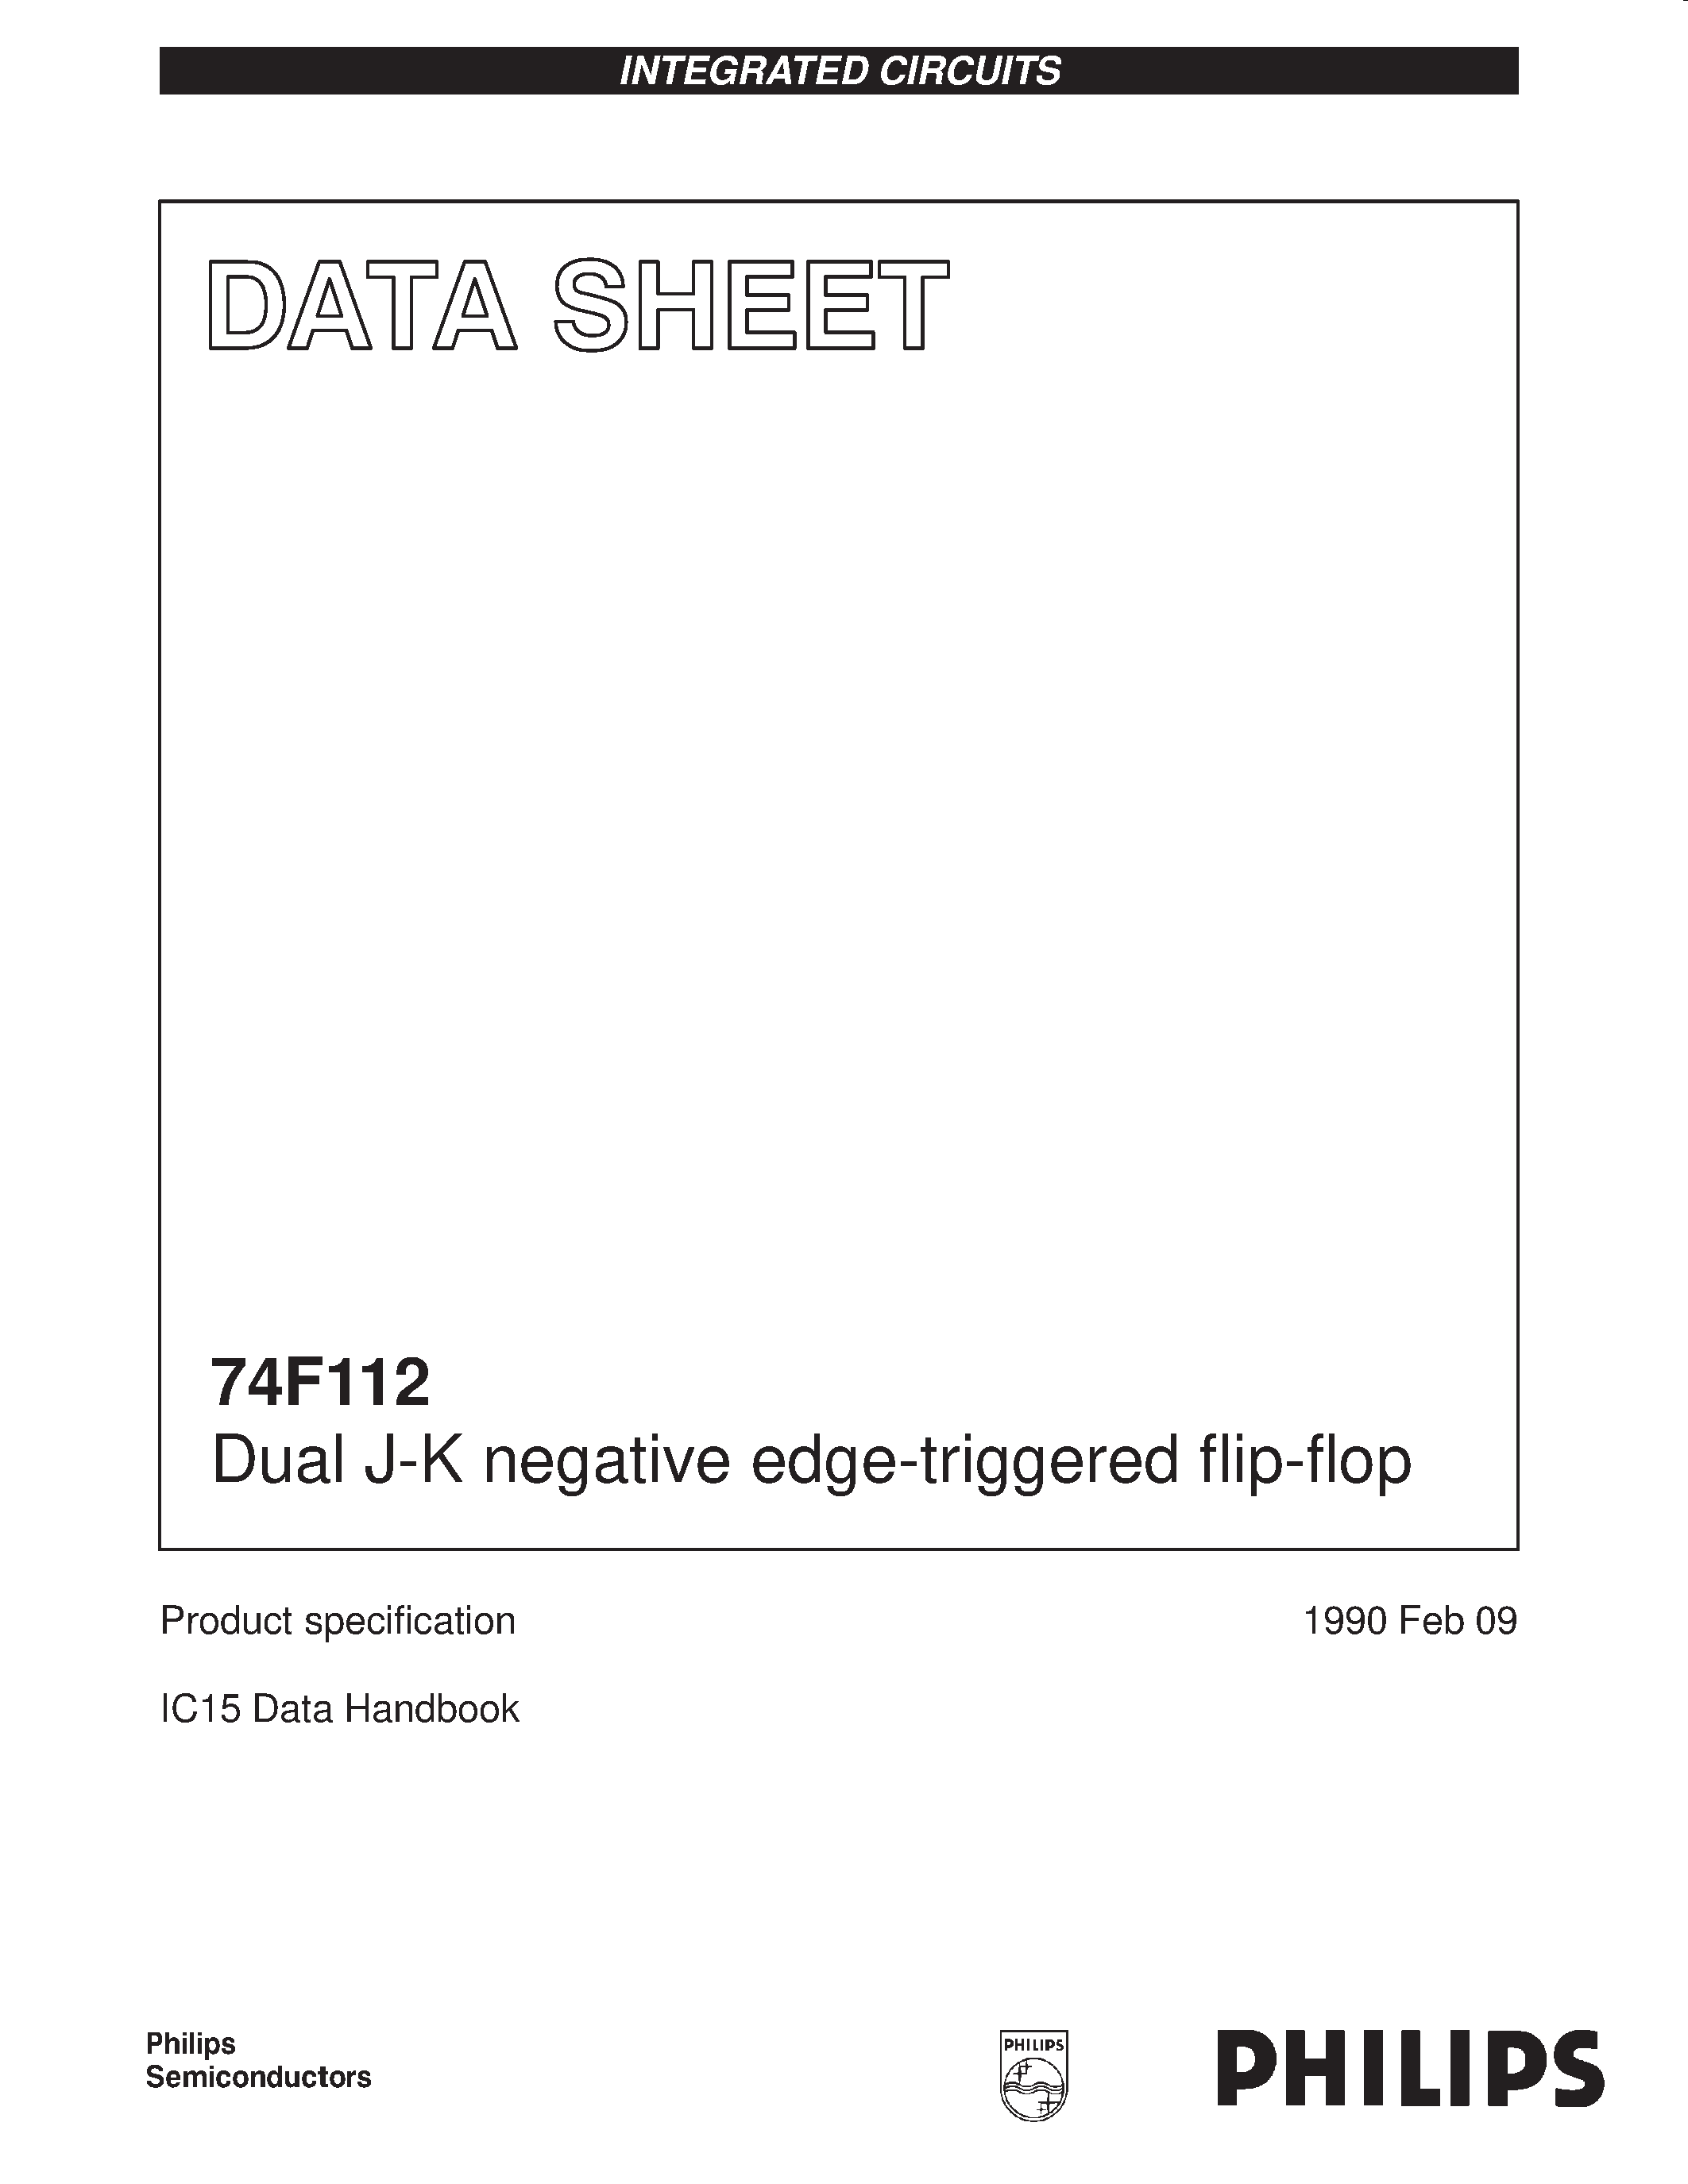 Datasheet N74F112D - Dual J-K negative edge-triggered flip-flop page 1